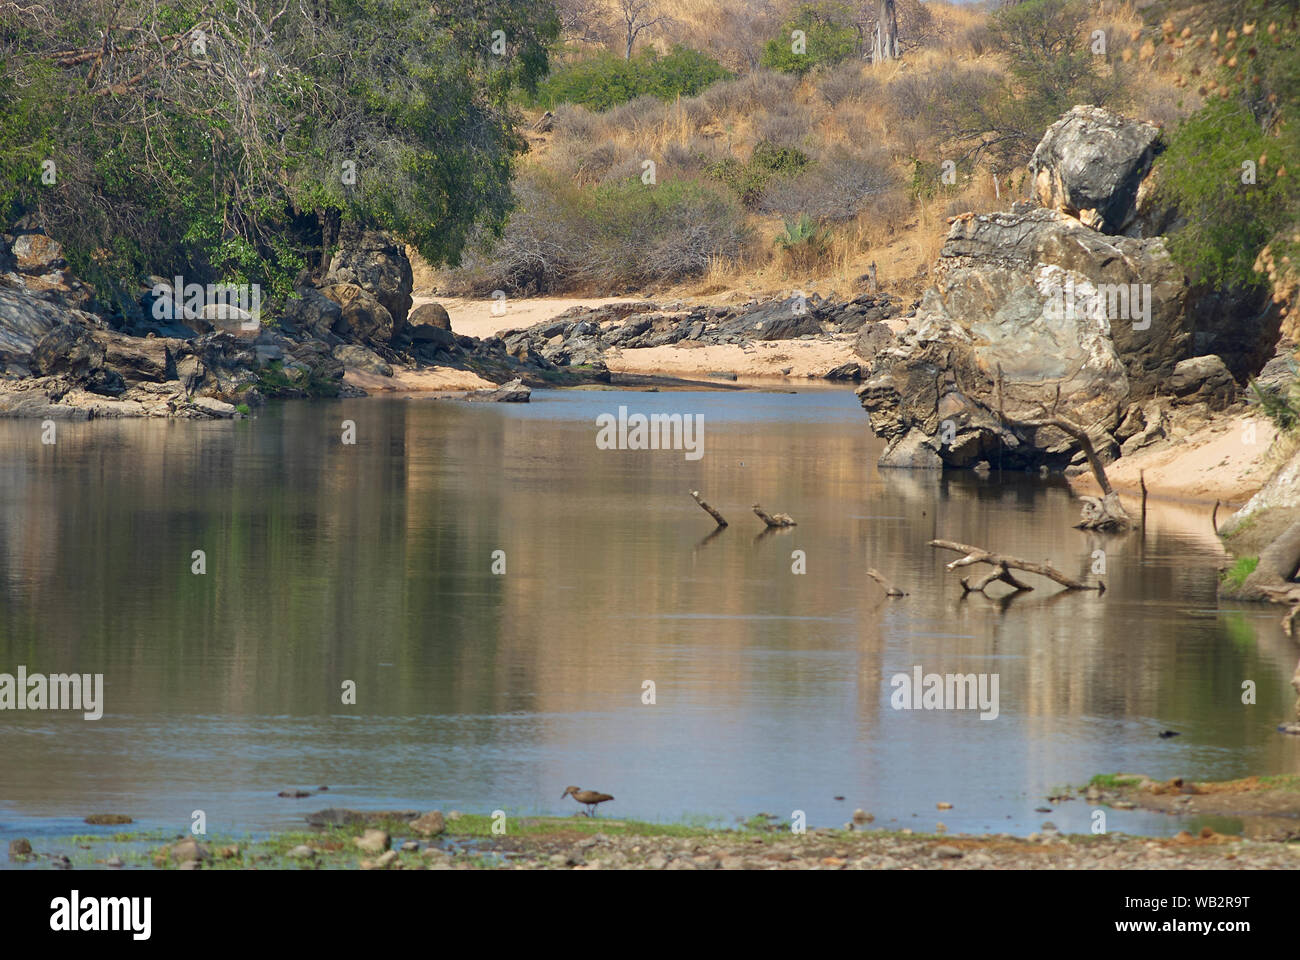 The Ruaha river at low water level, Tanzania Stock Photo